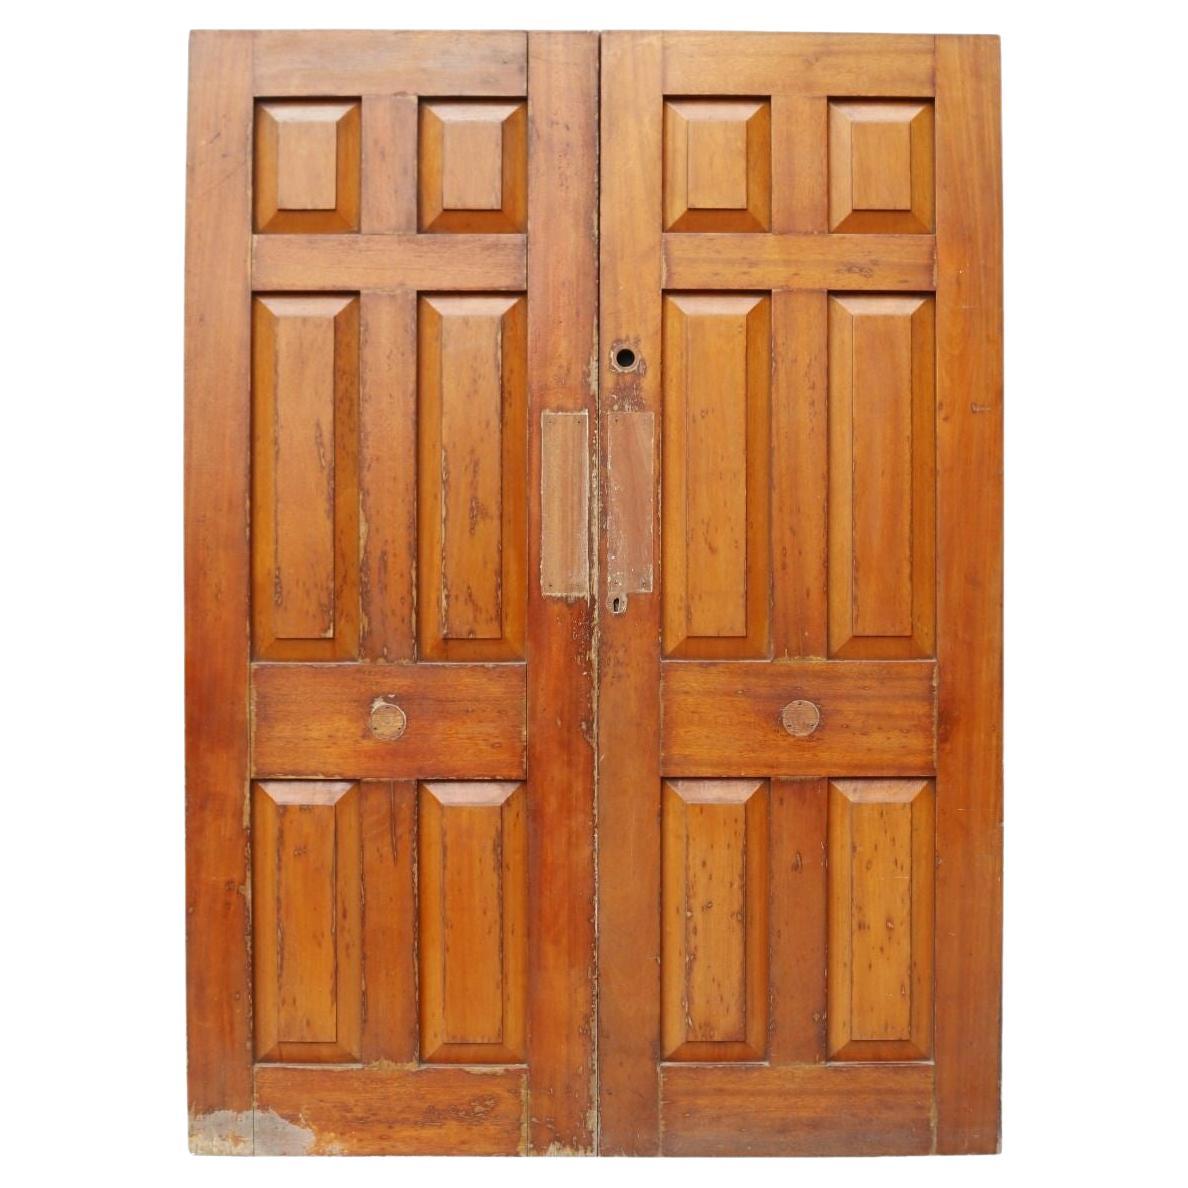 Reclaimed Hardwood Exterior Doors (Pair) For Sale